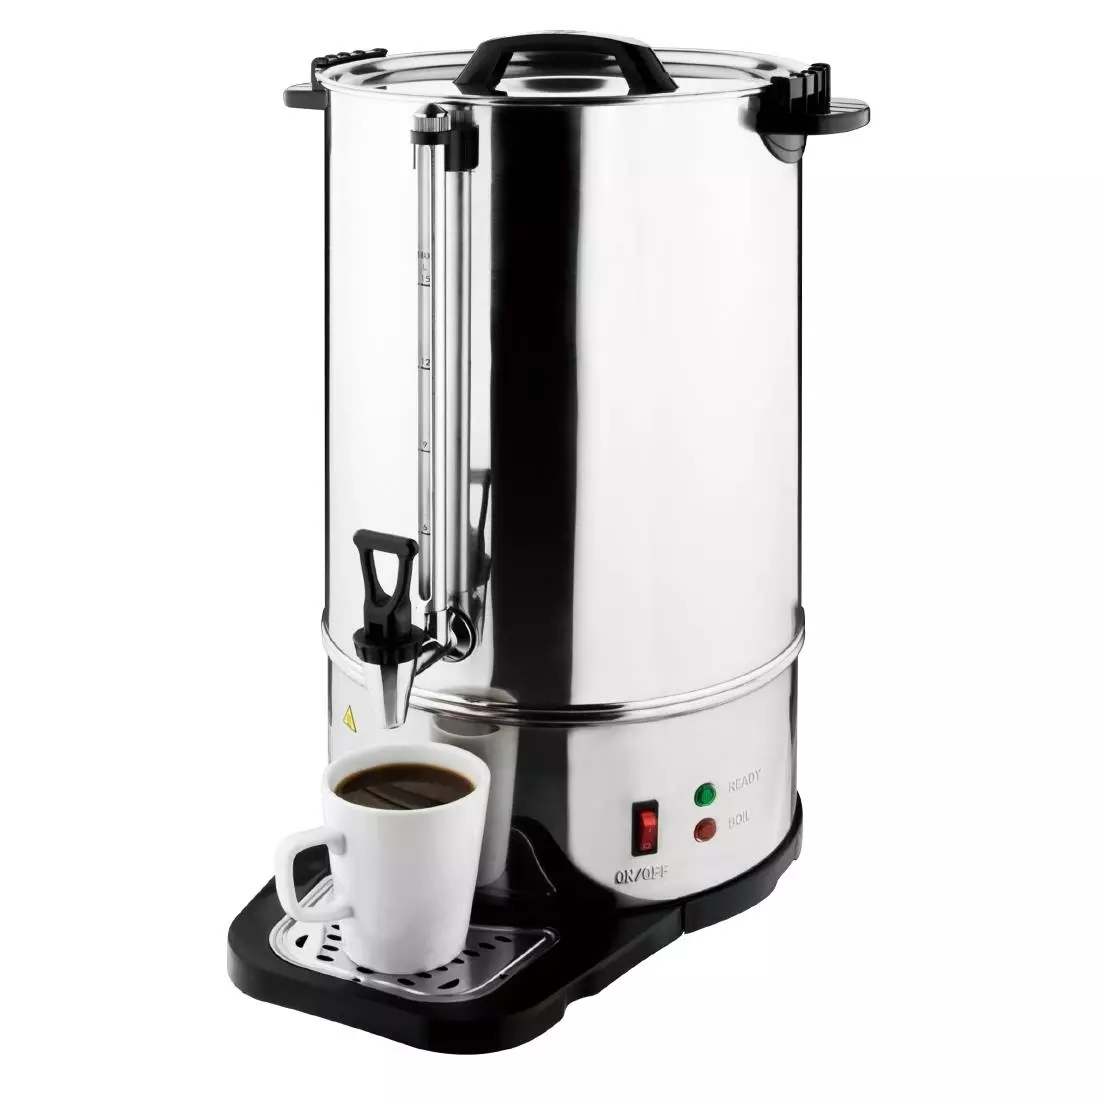 Een Buffalo koffiepercolator 15L koop je bij ShopXPress